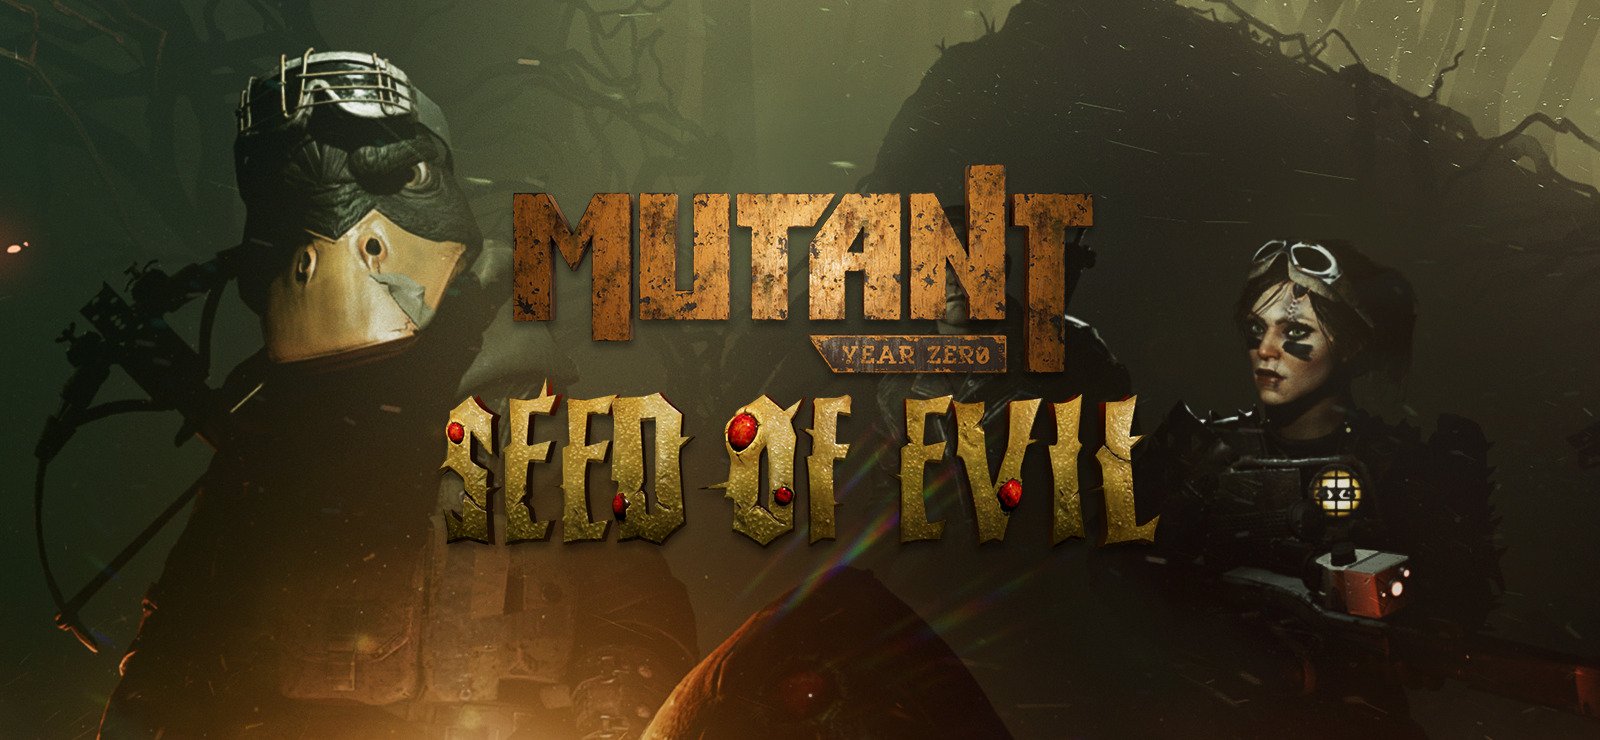 Mutant Year Zero Seed of Evil 6